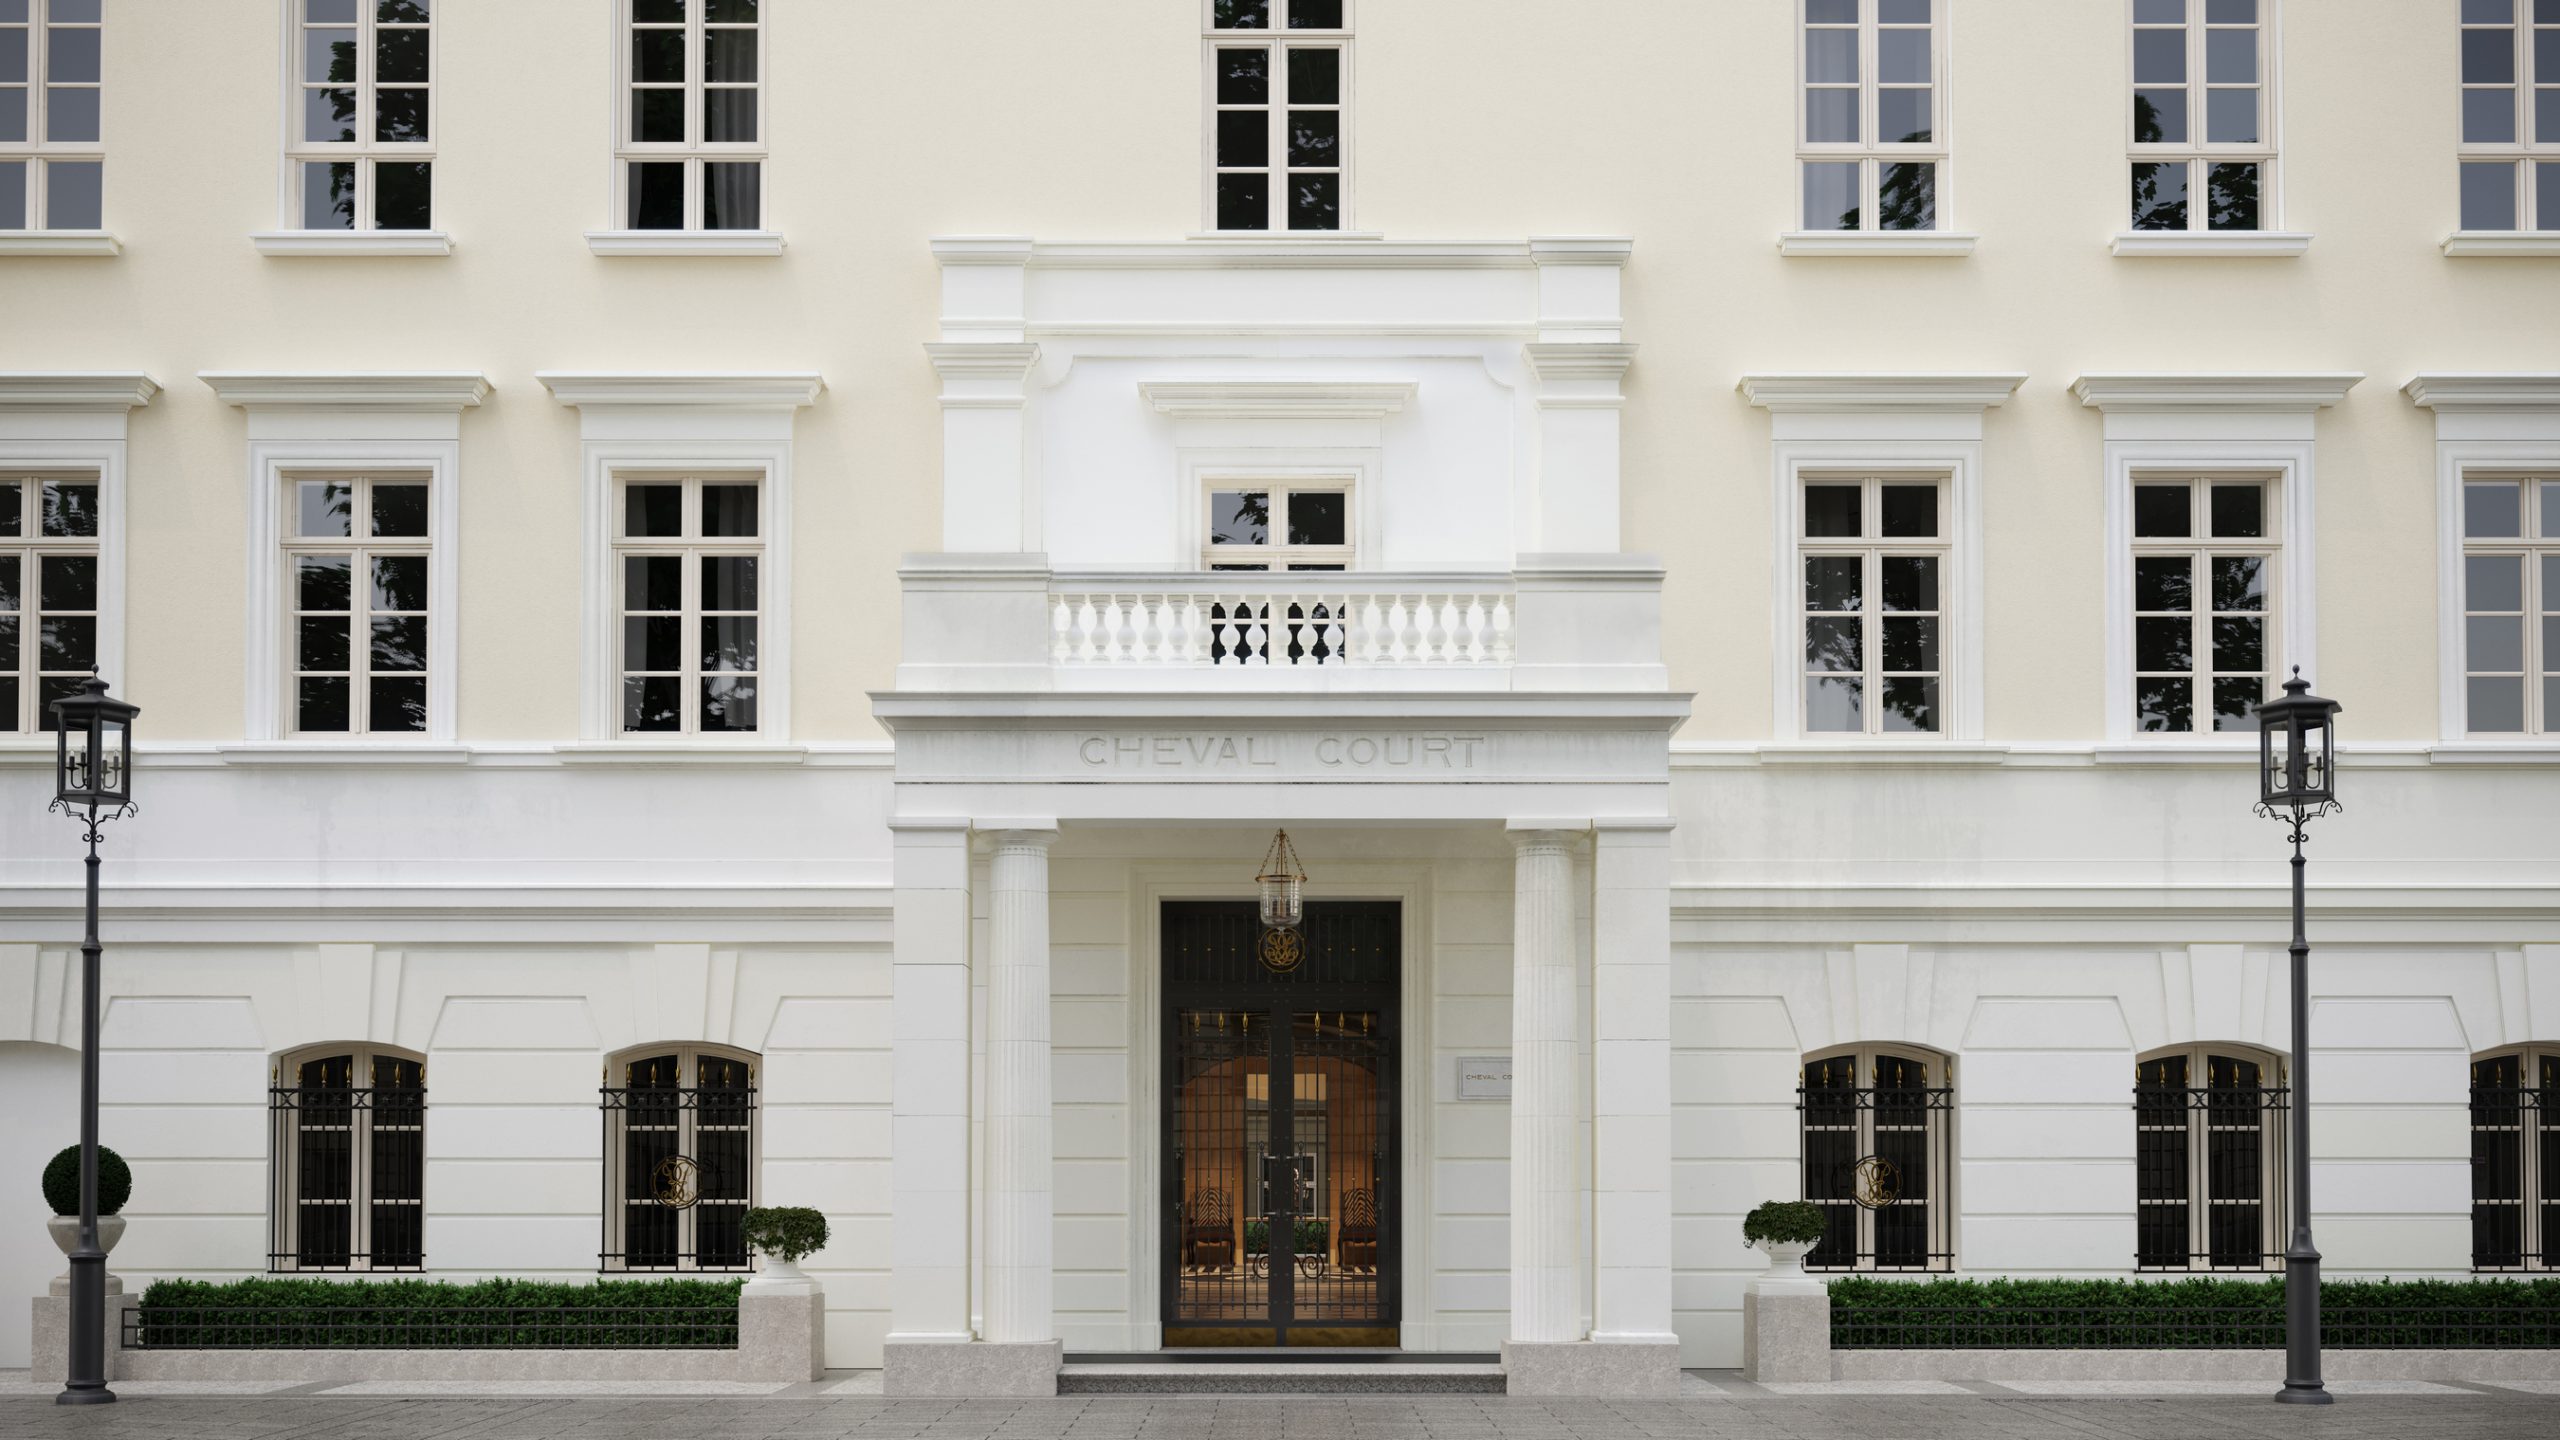 Cheval Court Exteriors For Ralph Lauren Home, London - , 1